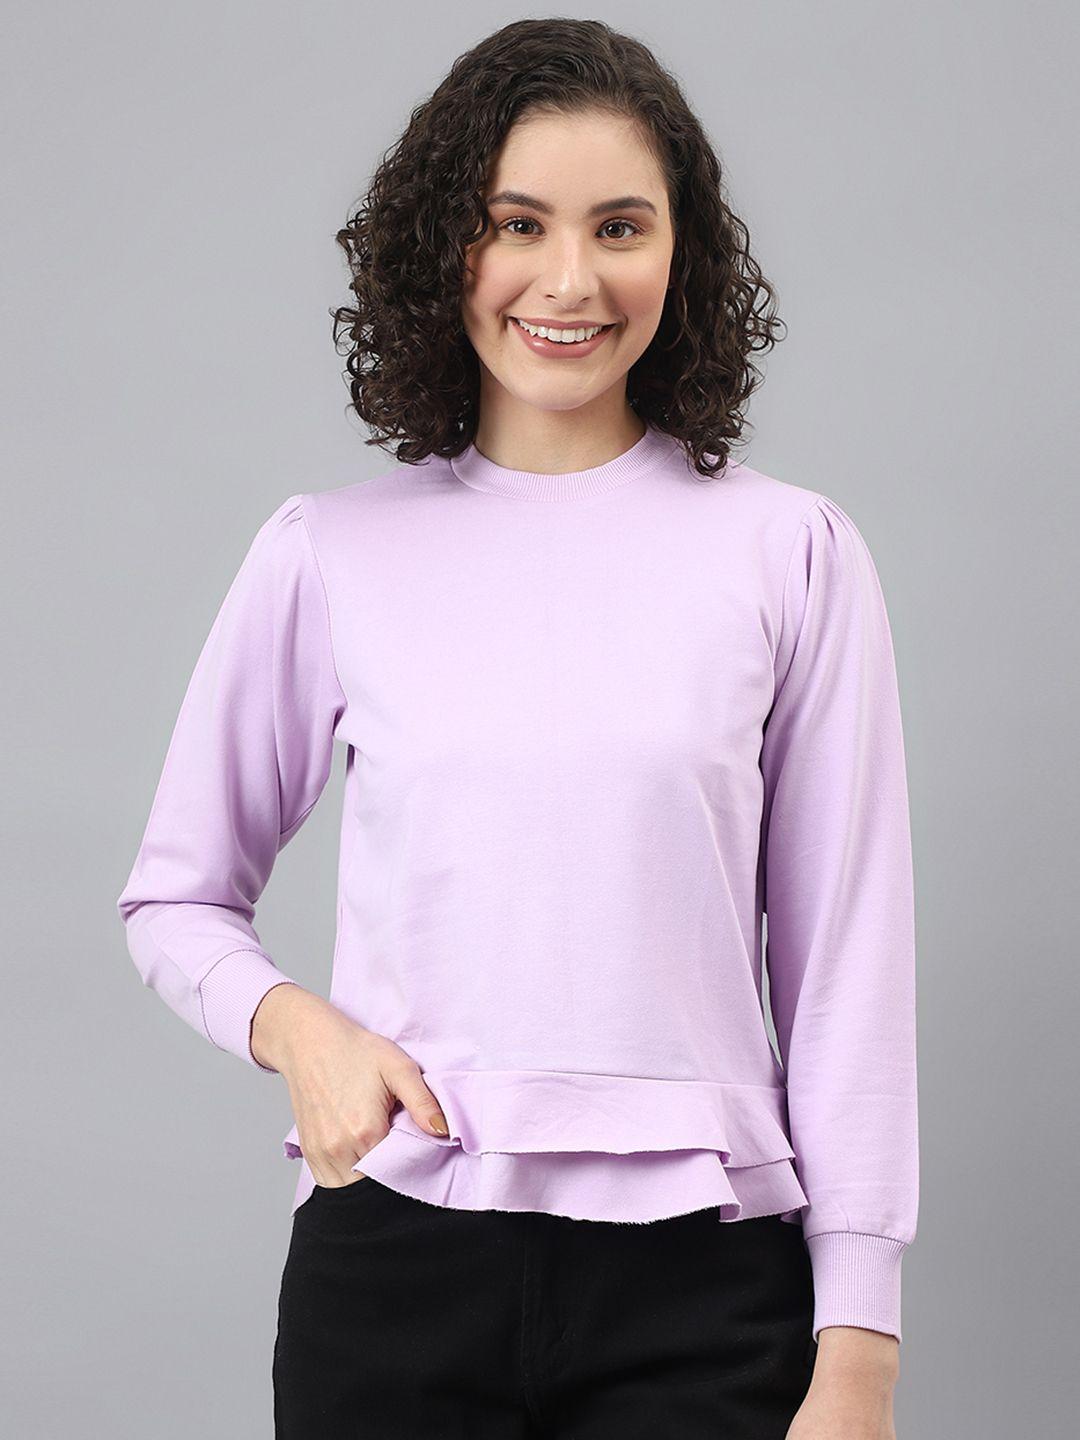 deebaco women lavender sweatshirt with ruffles